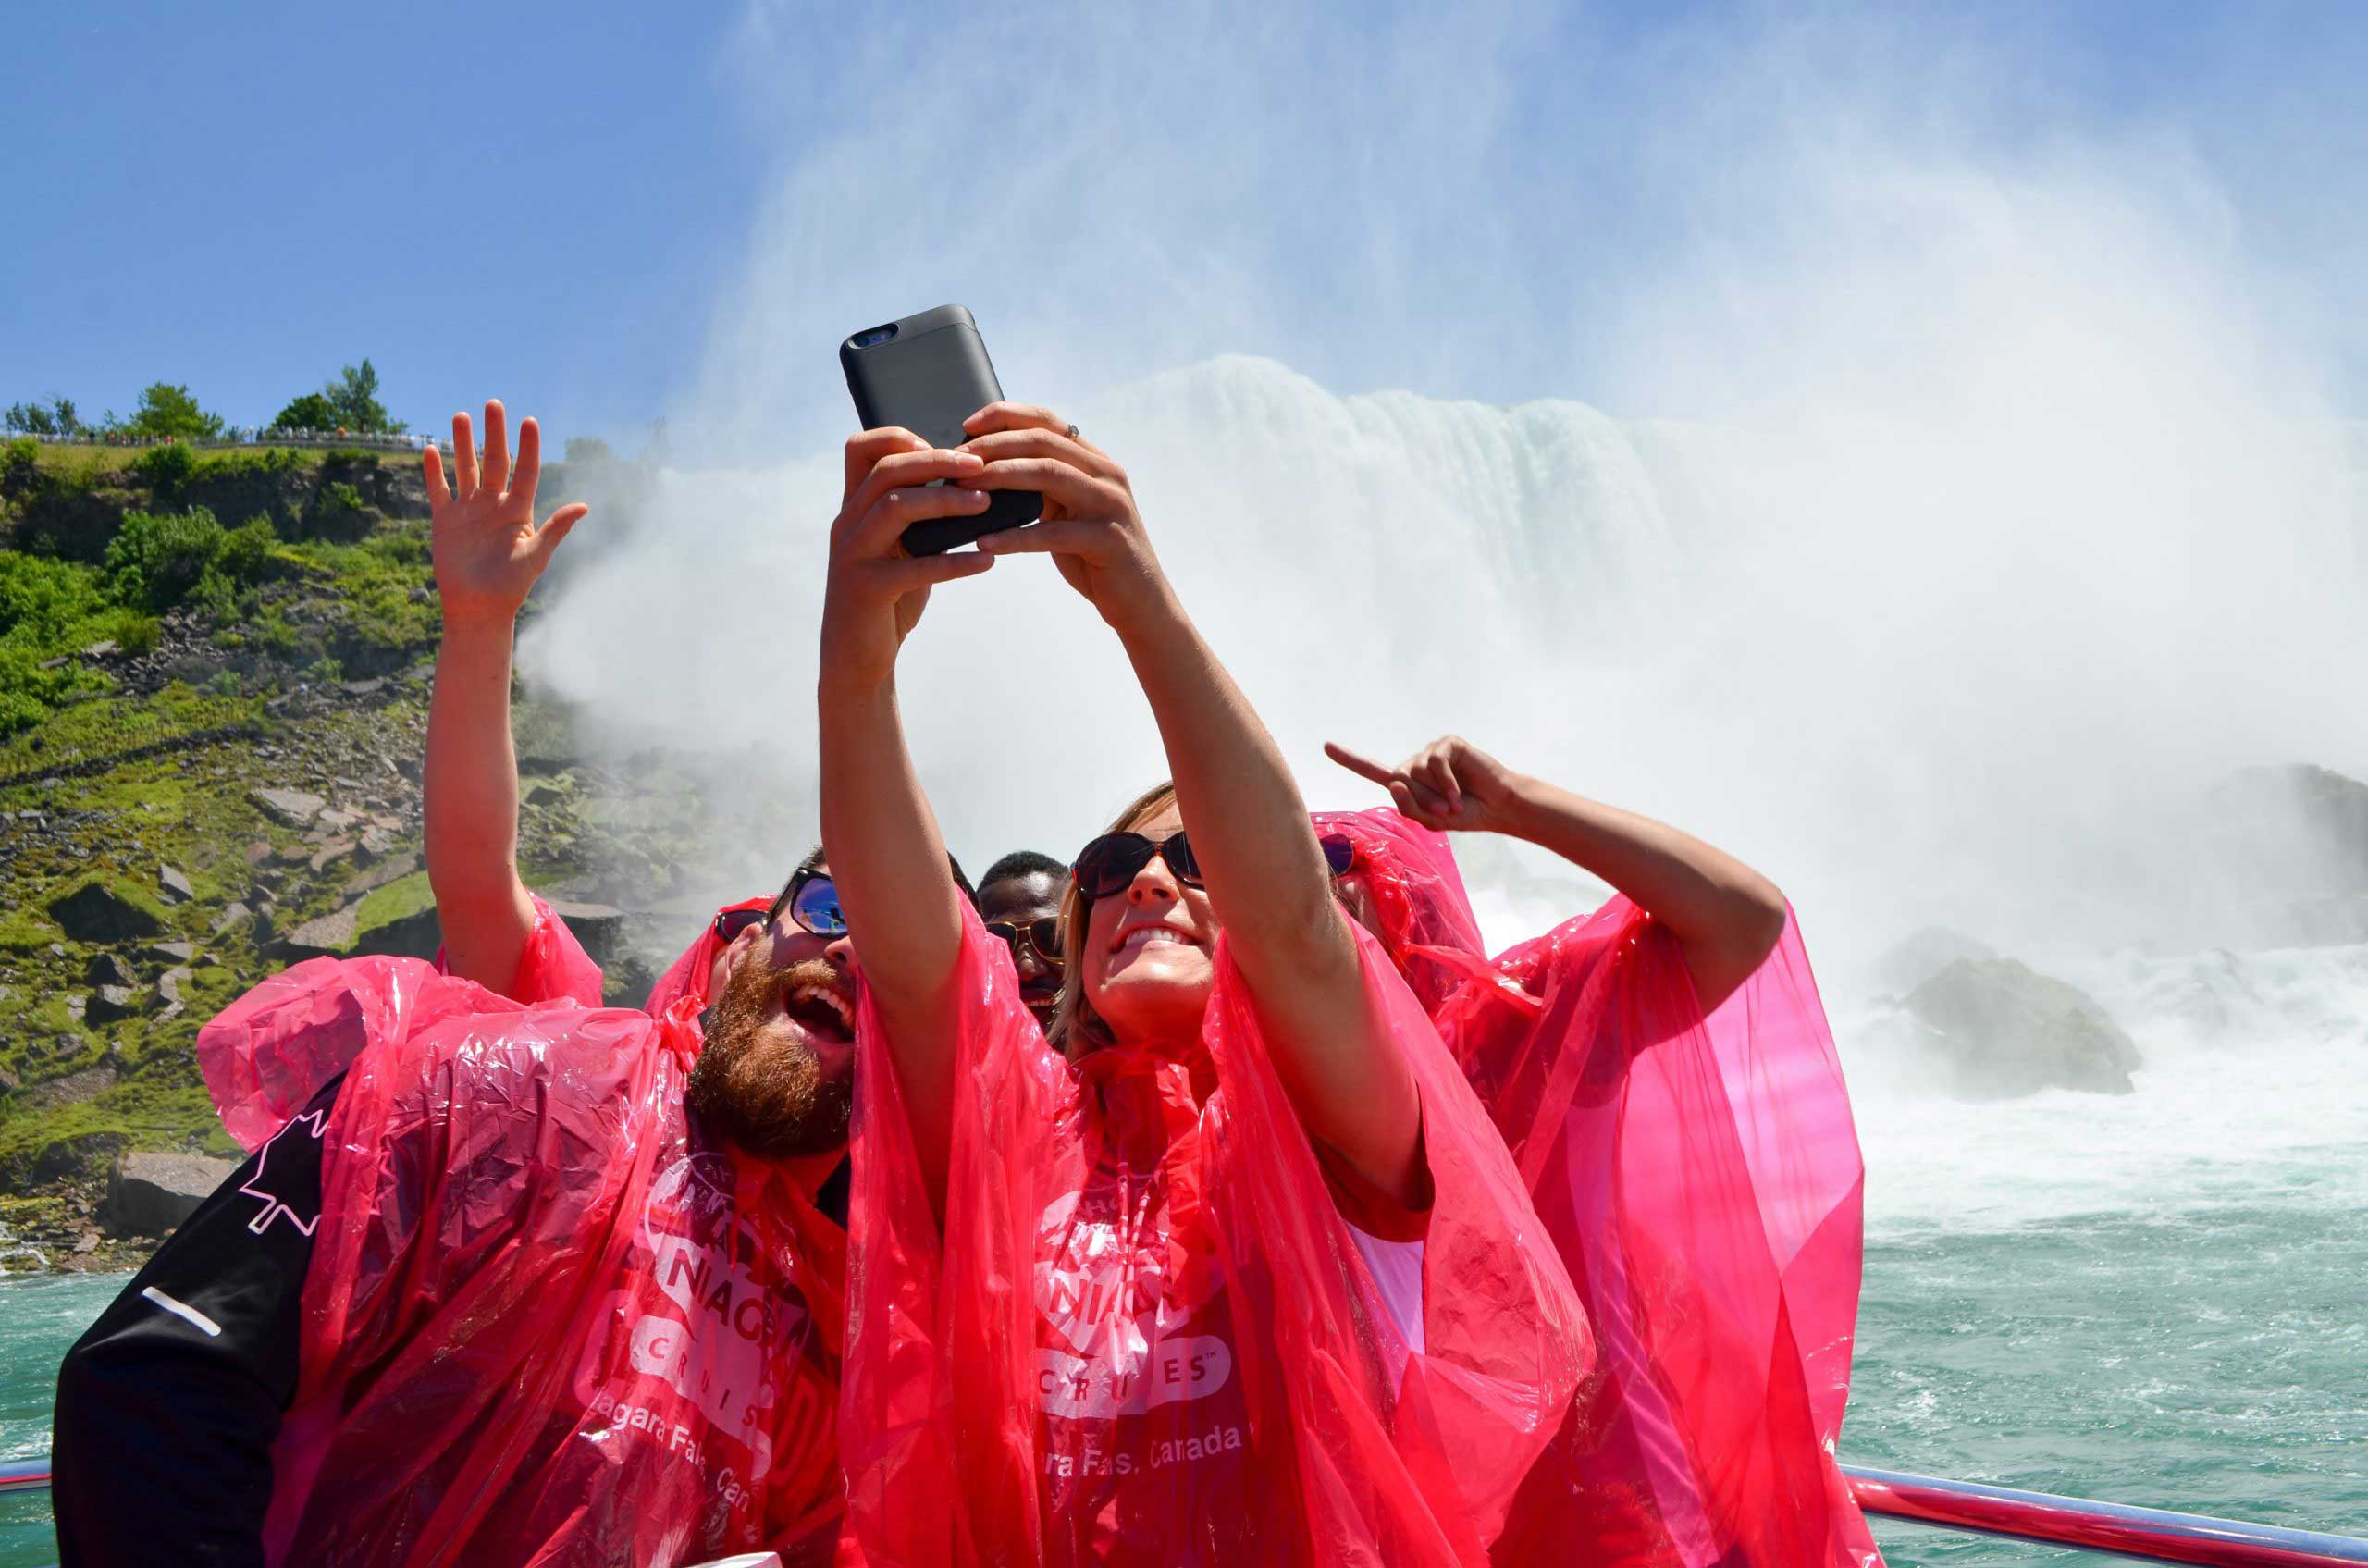 Niagara falls selfie